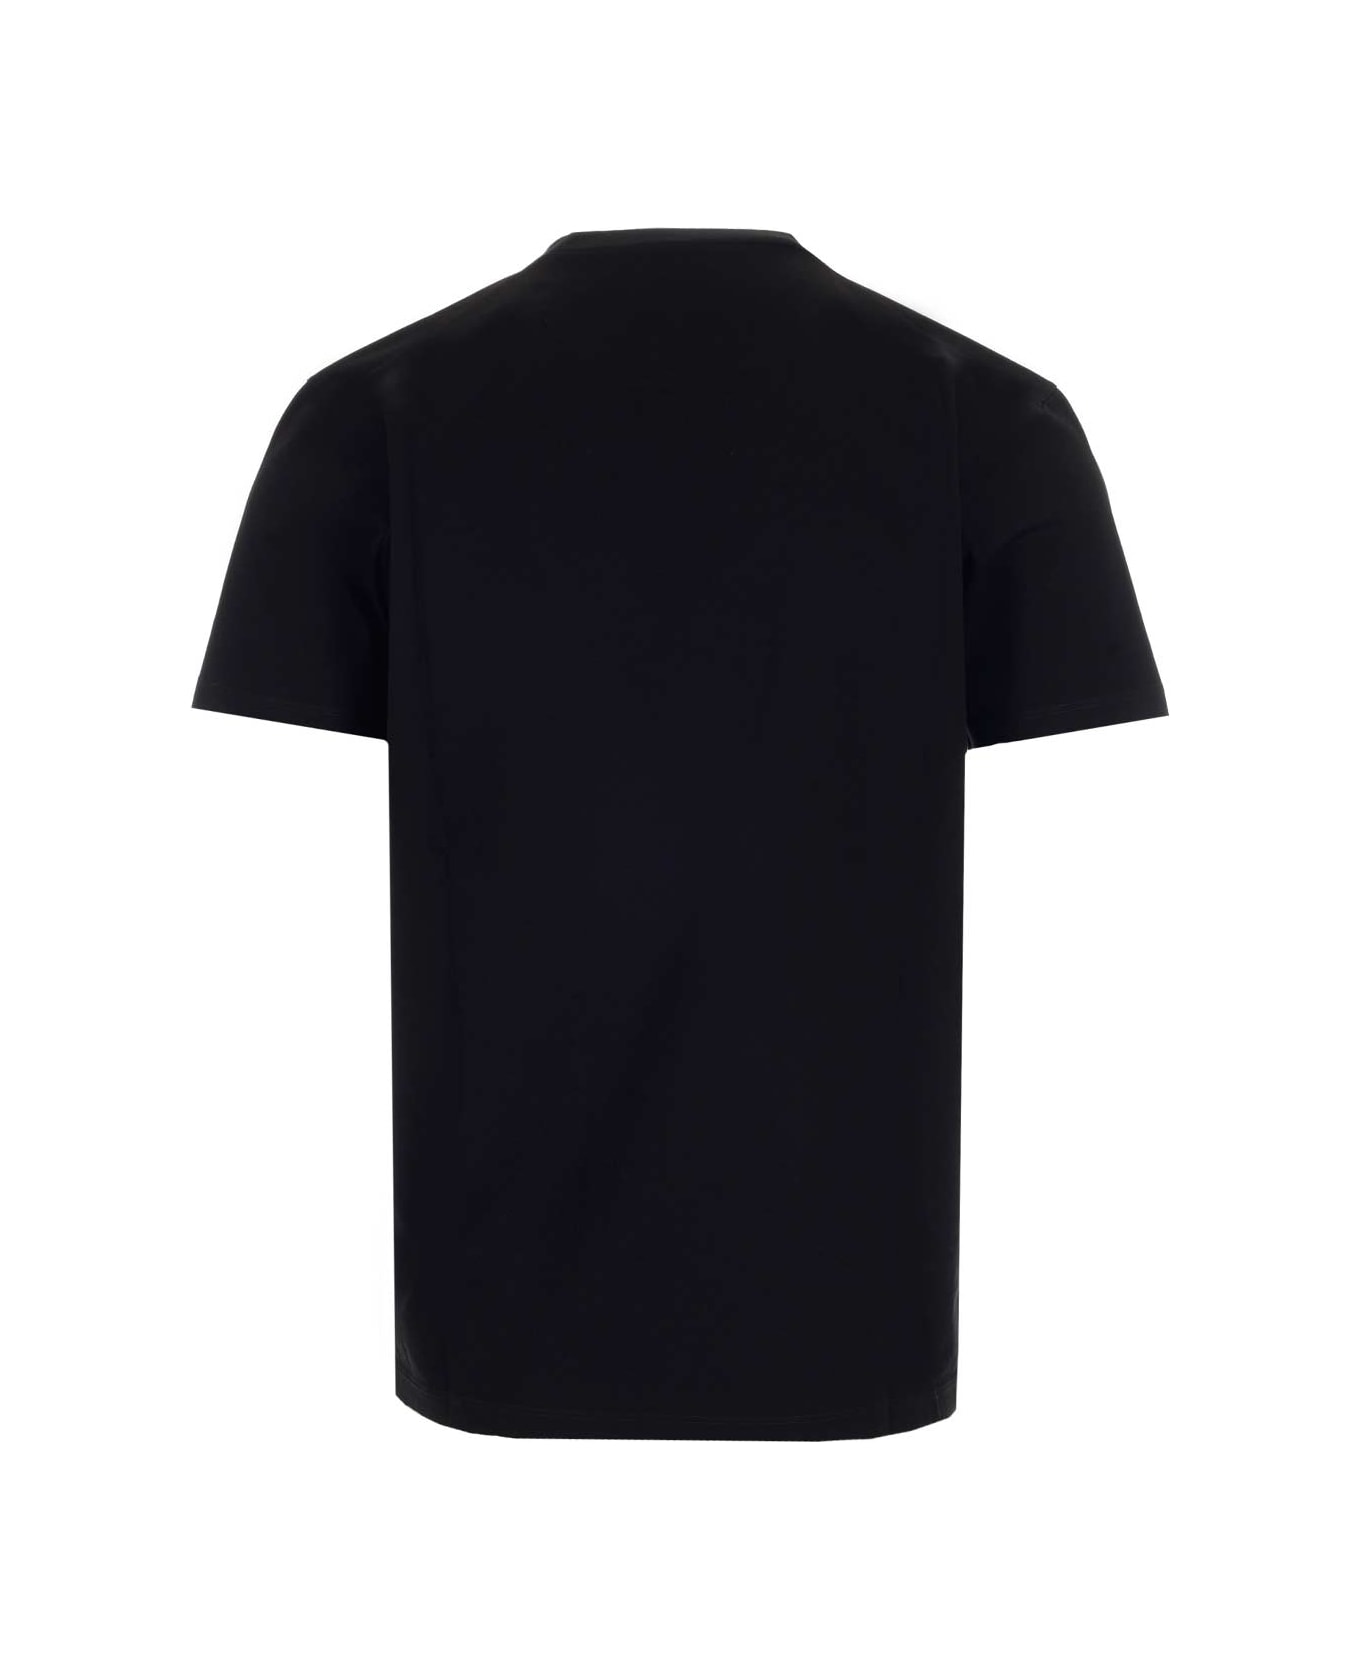 Burberry Black T-shirt With Logo - Black